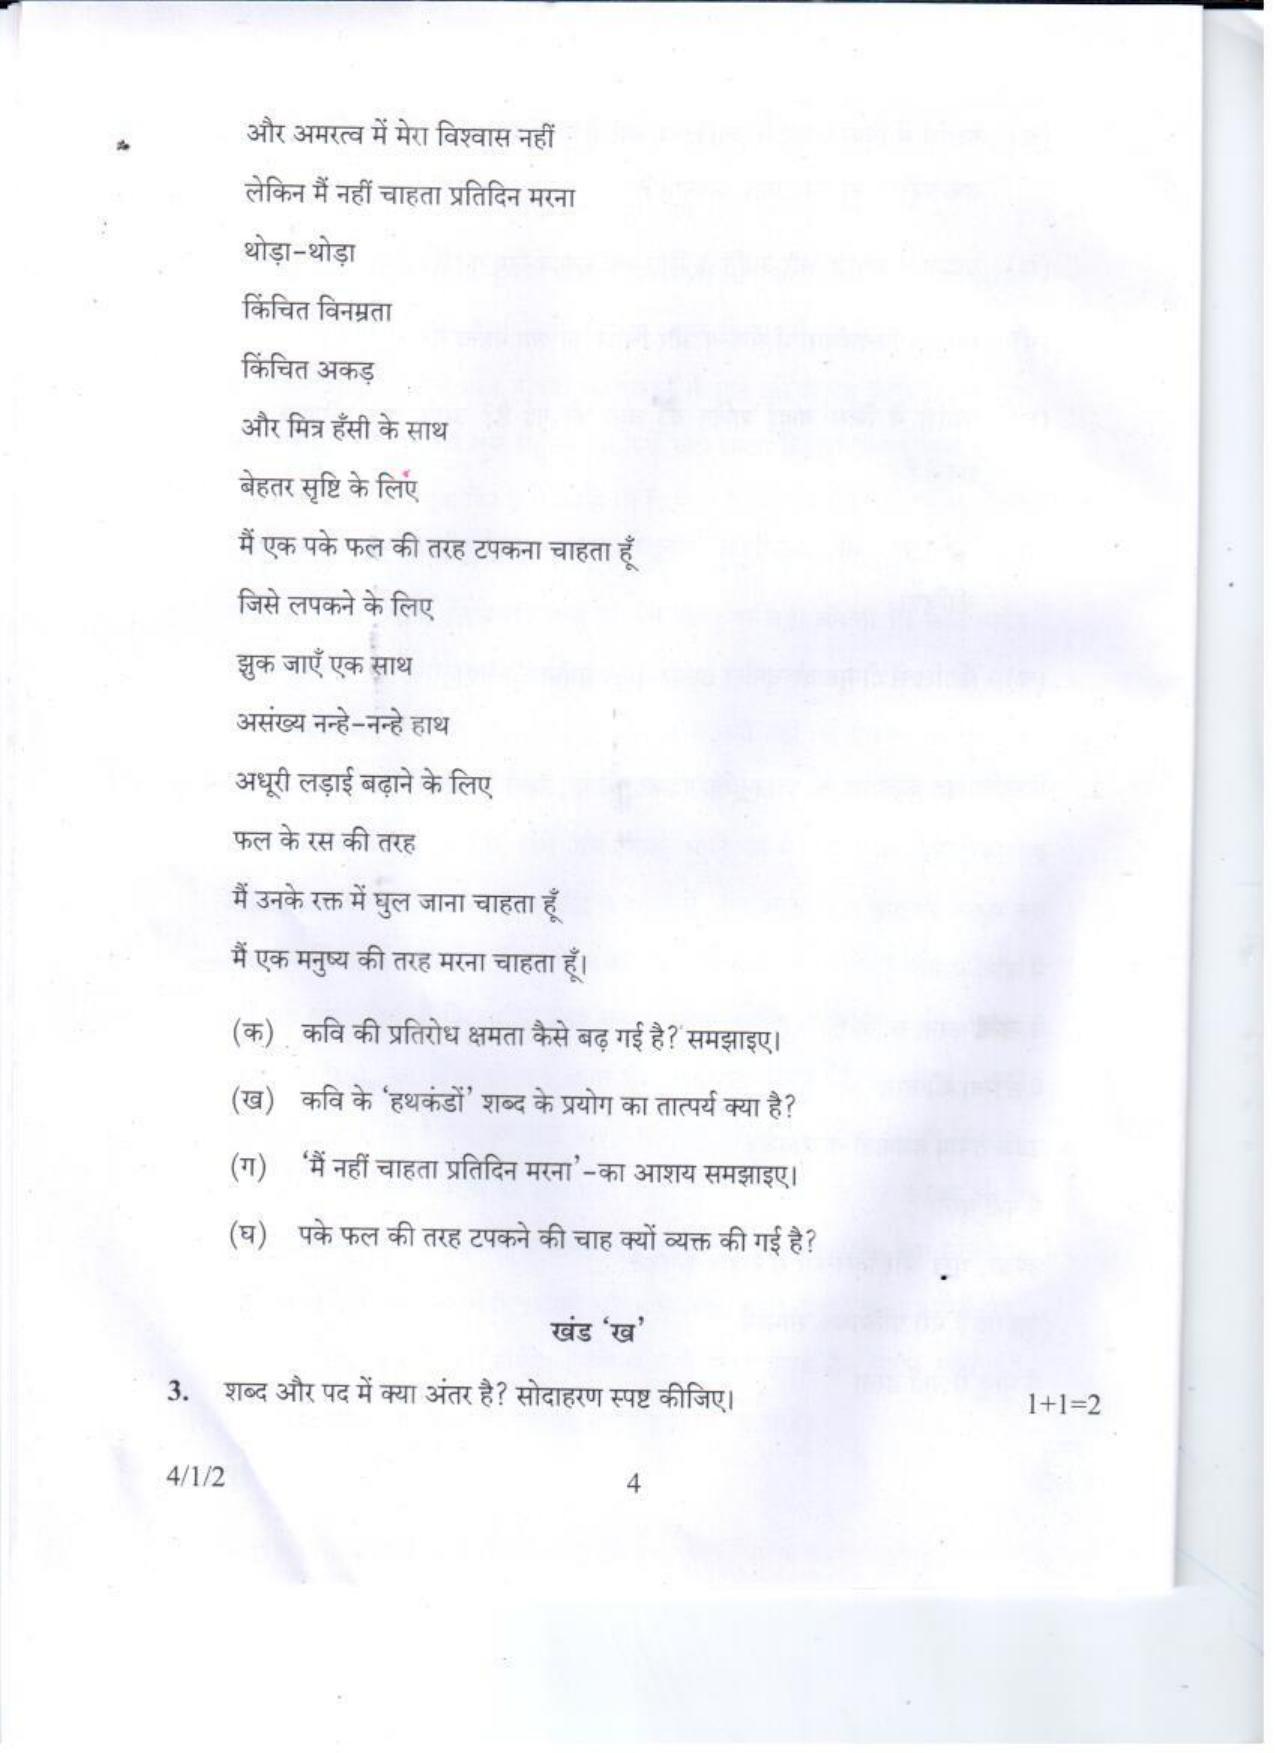 CBSE Class 10 Hindi HRK Set-2-Delhi-10 2017 Question Paper - Page 4